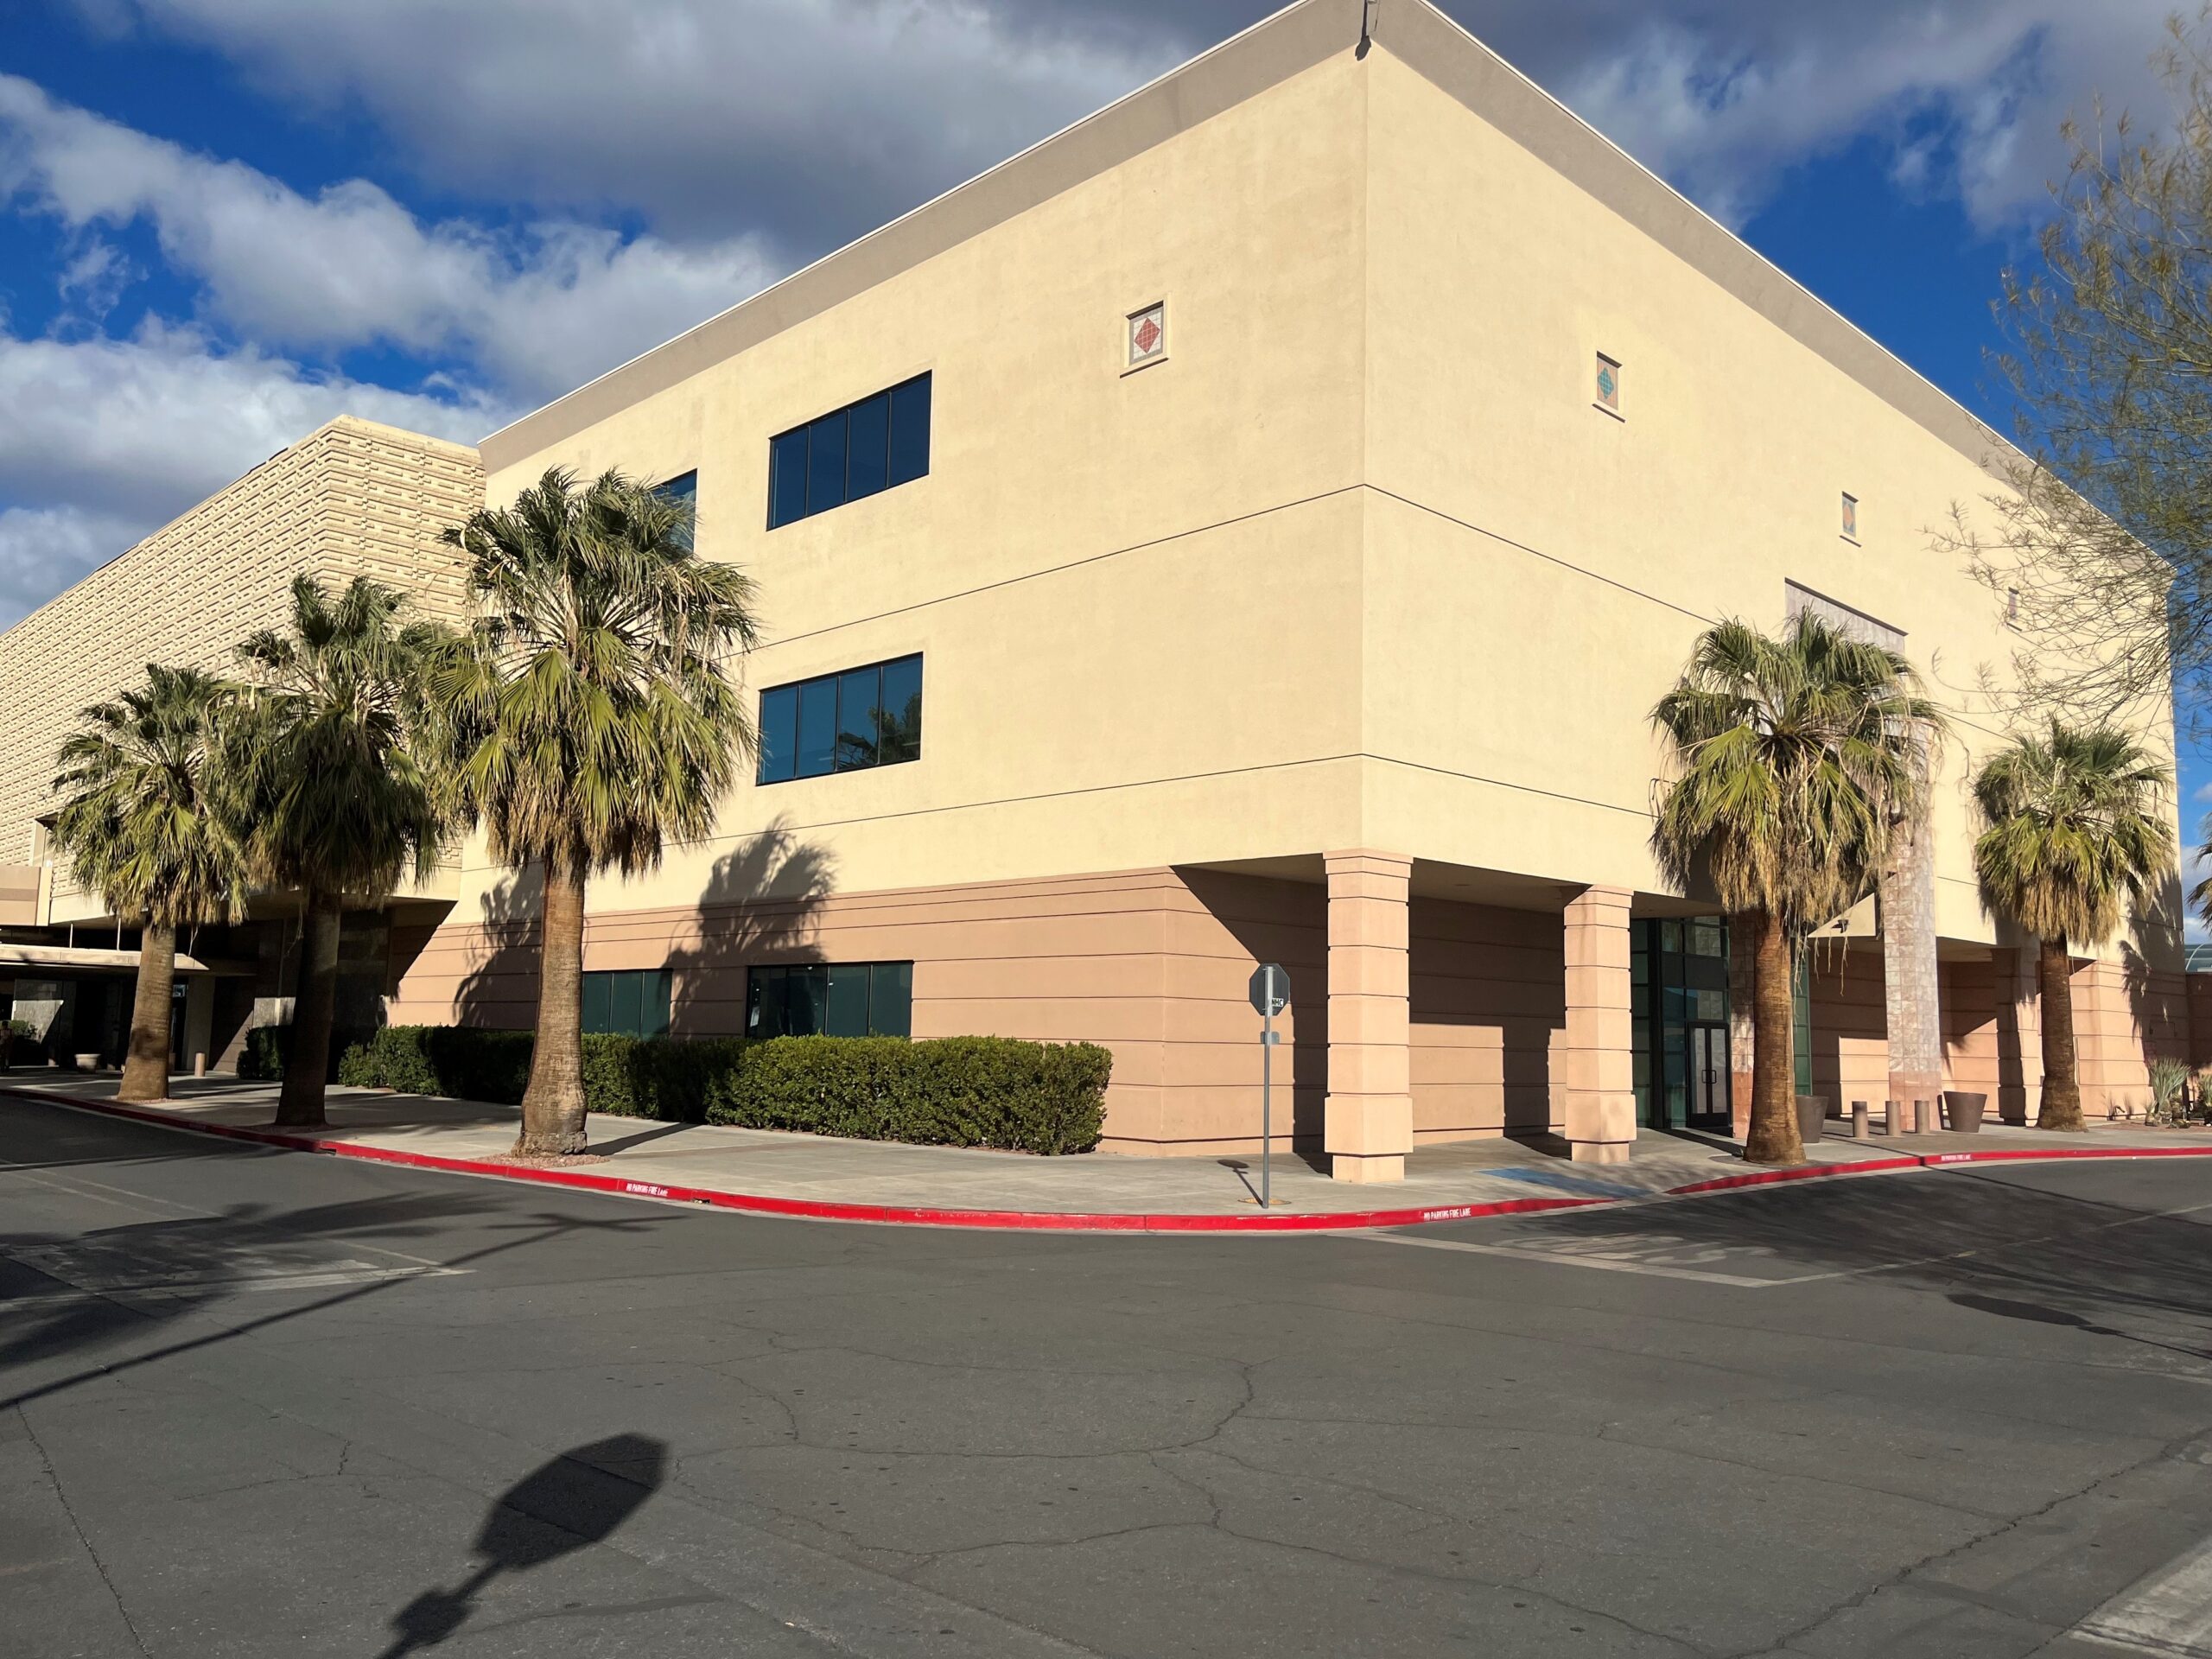 News Release: Avison Young negotiates 45,257-sf office lease for Barton Associates in Las Vegas